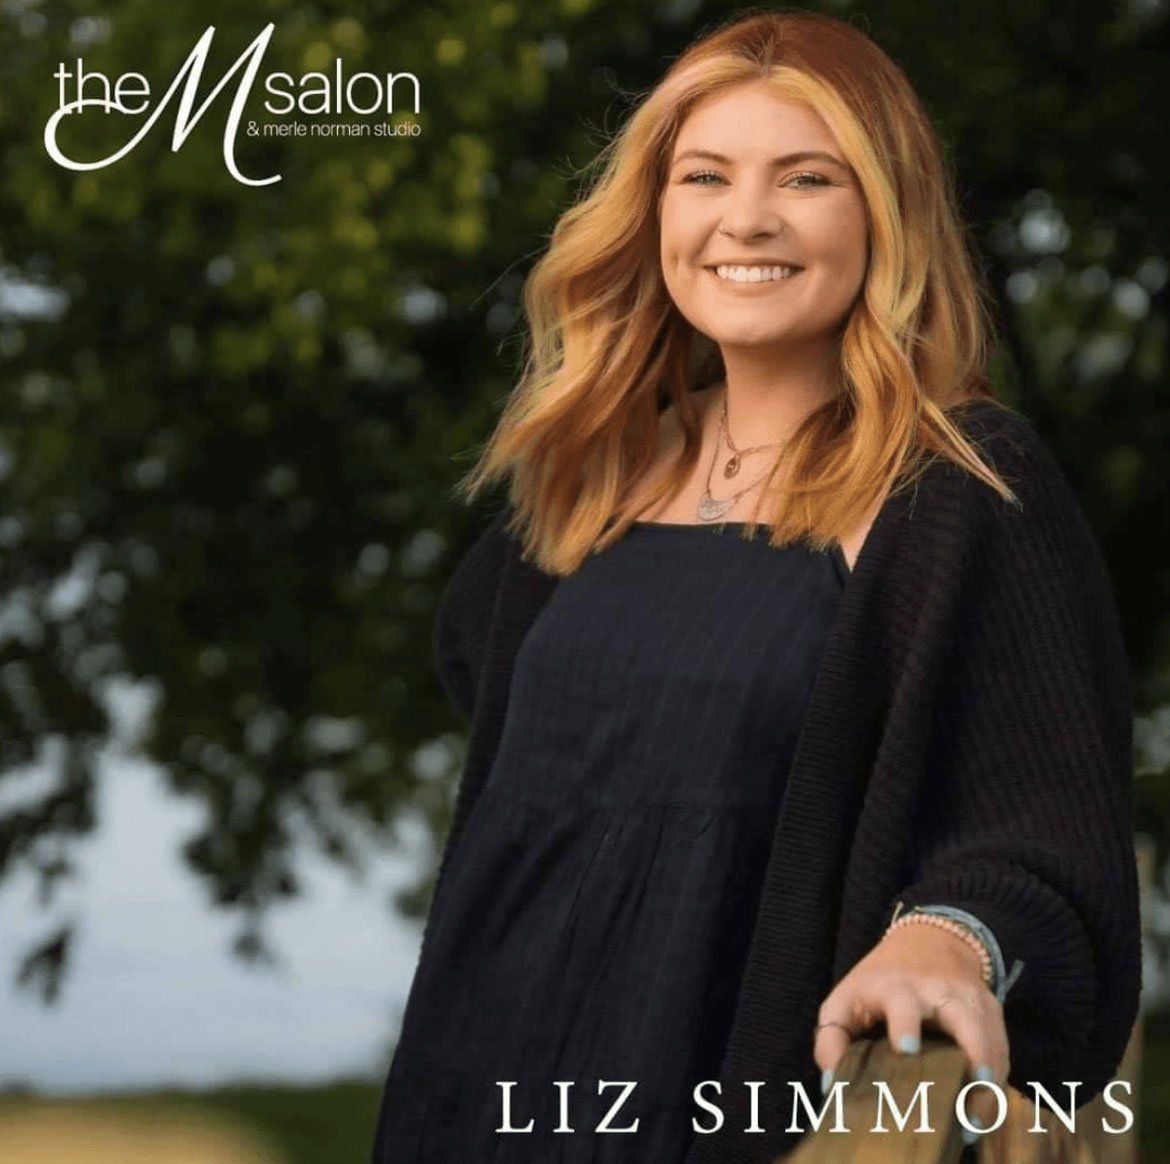 Liz Simmons